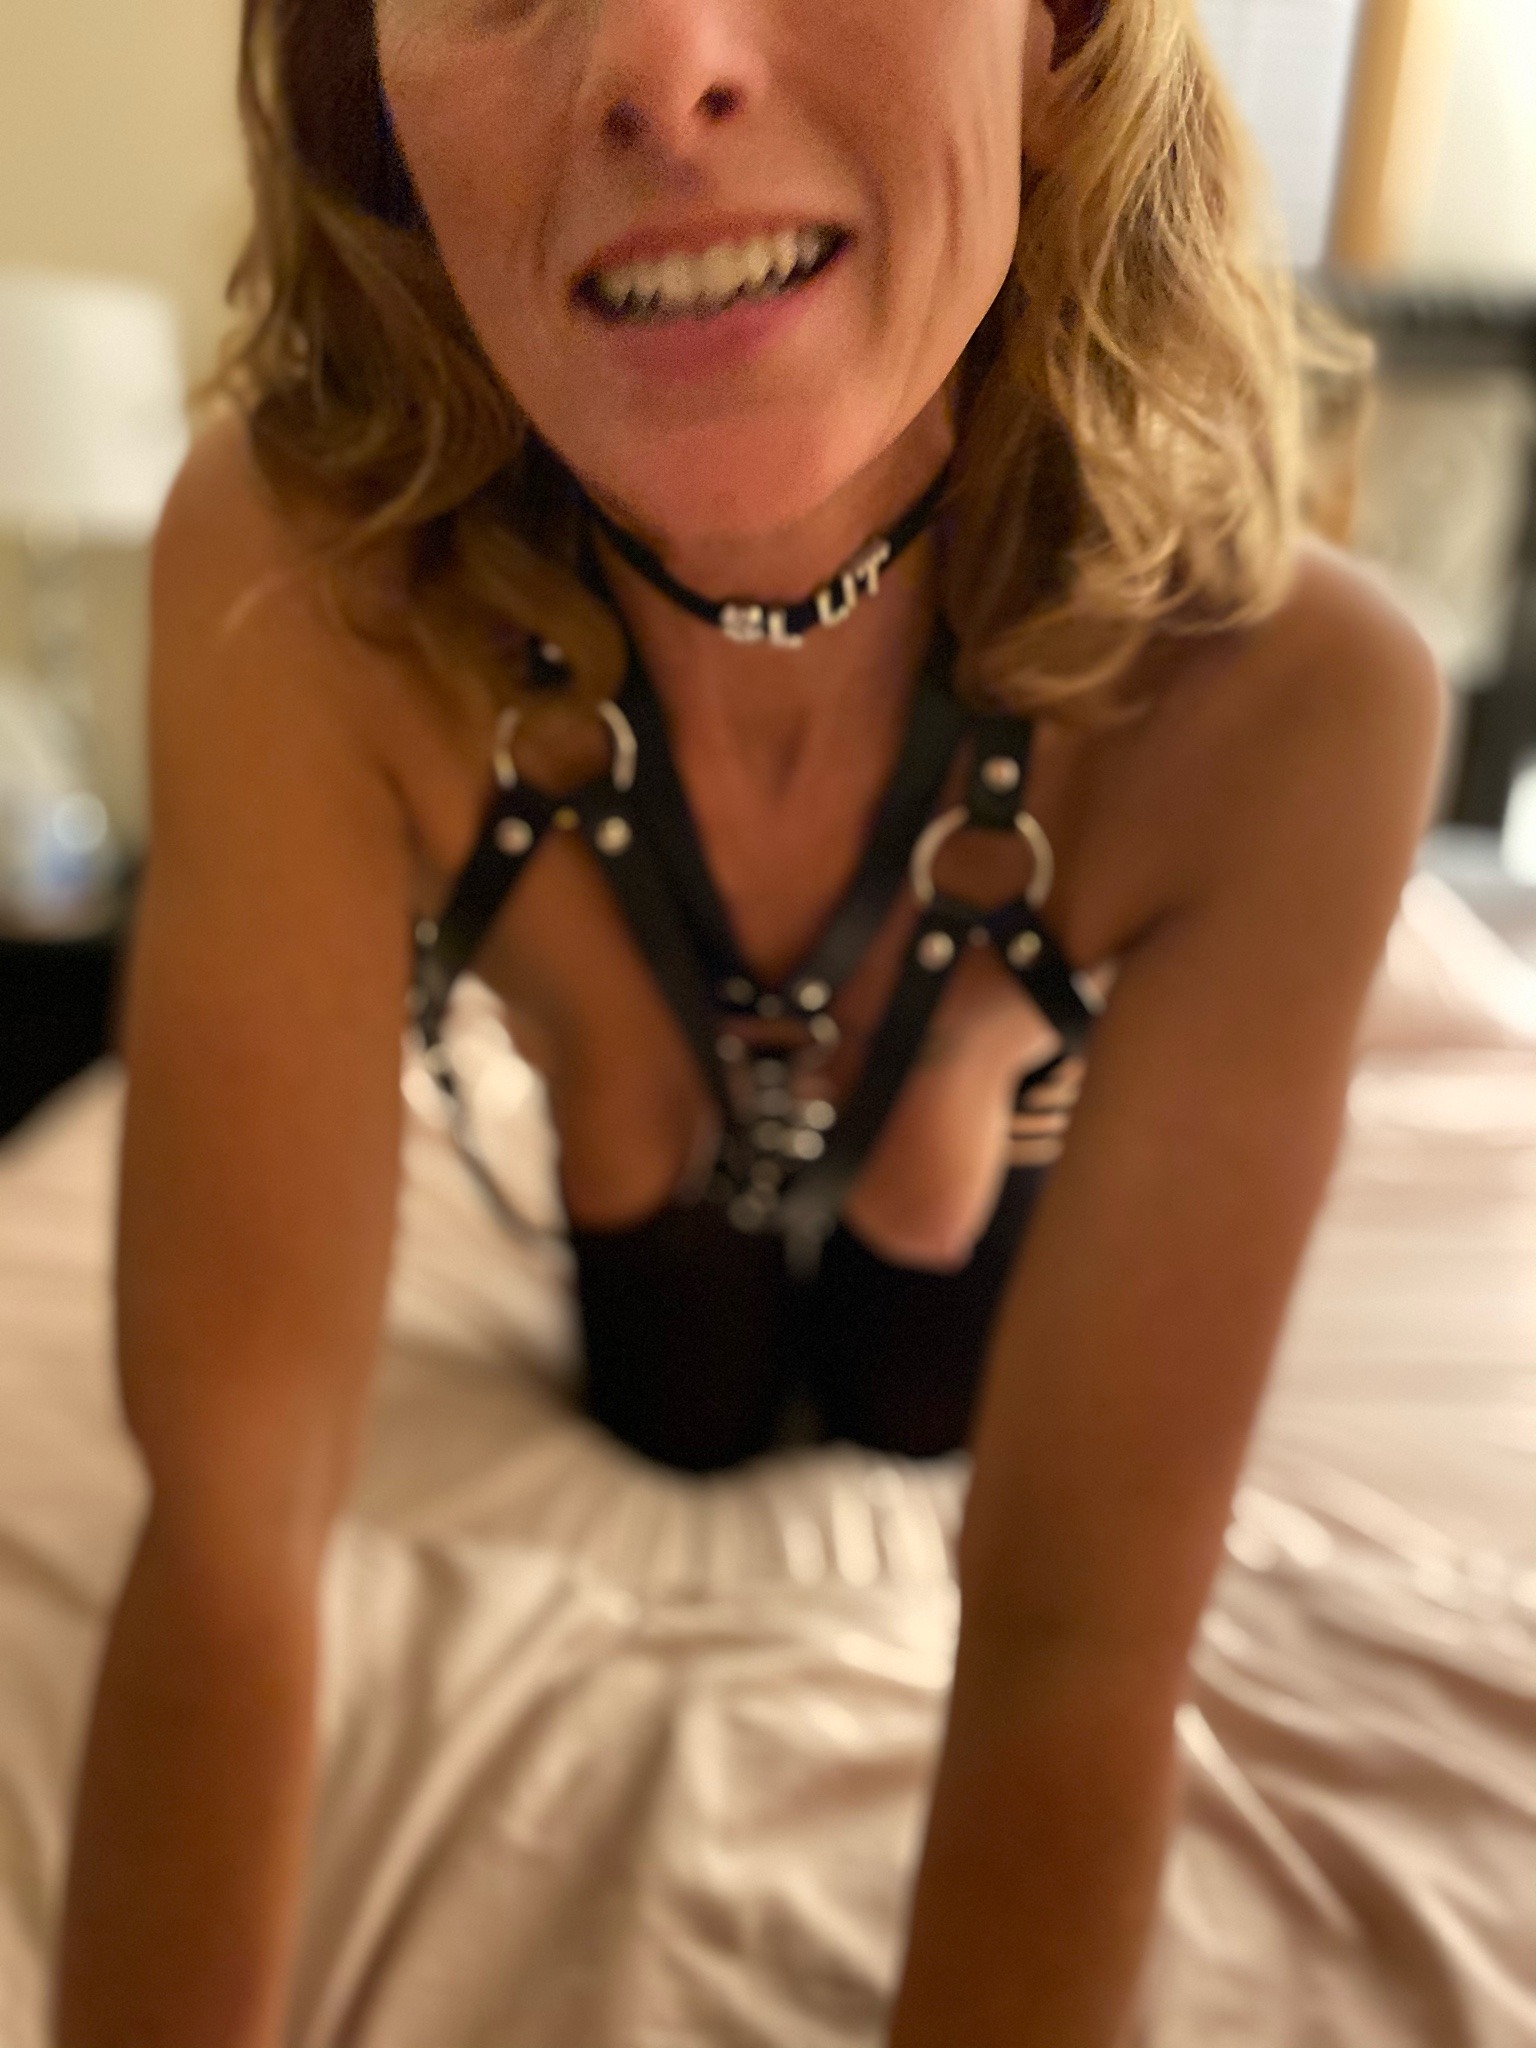 Porn whynotsheisamazing:On her new leather strap photos